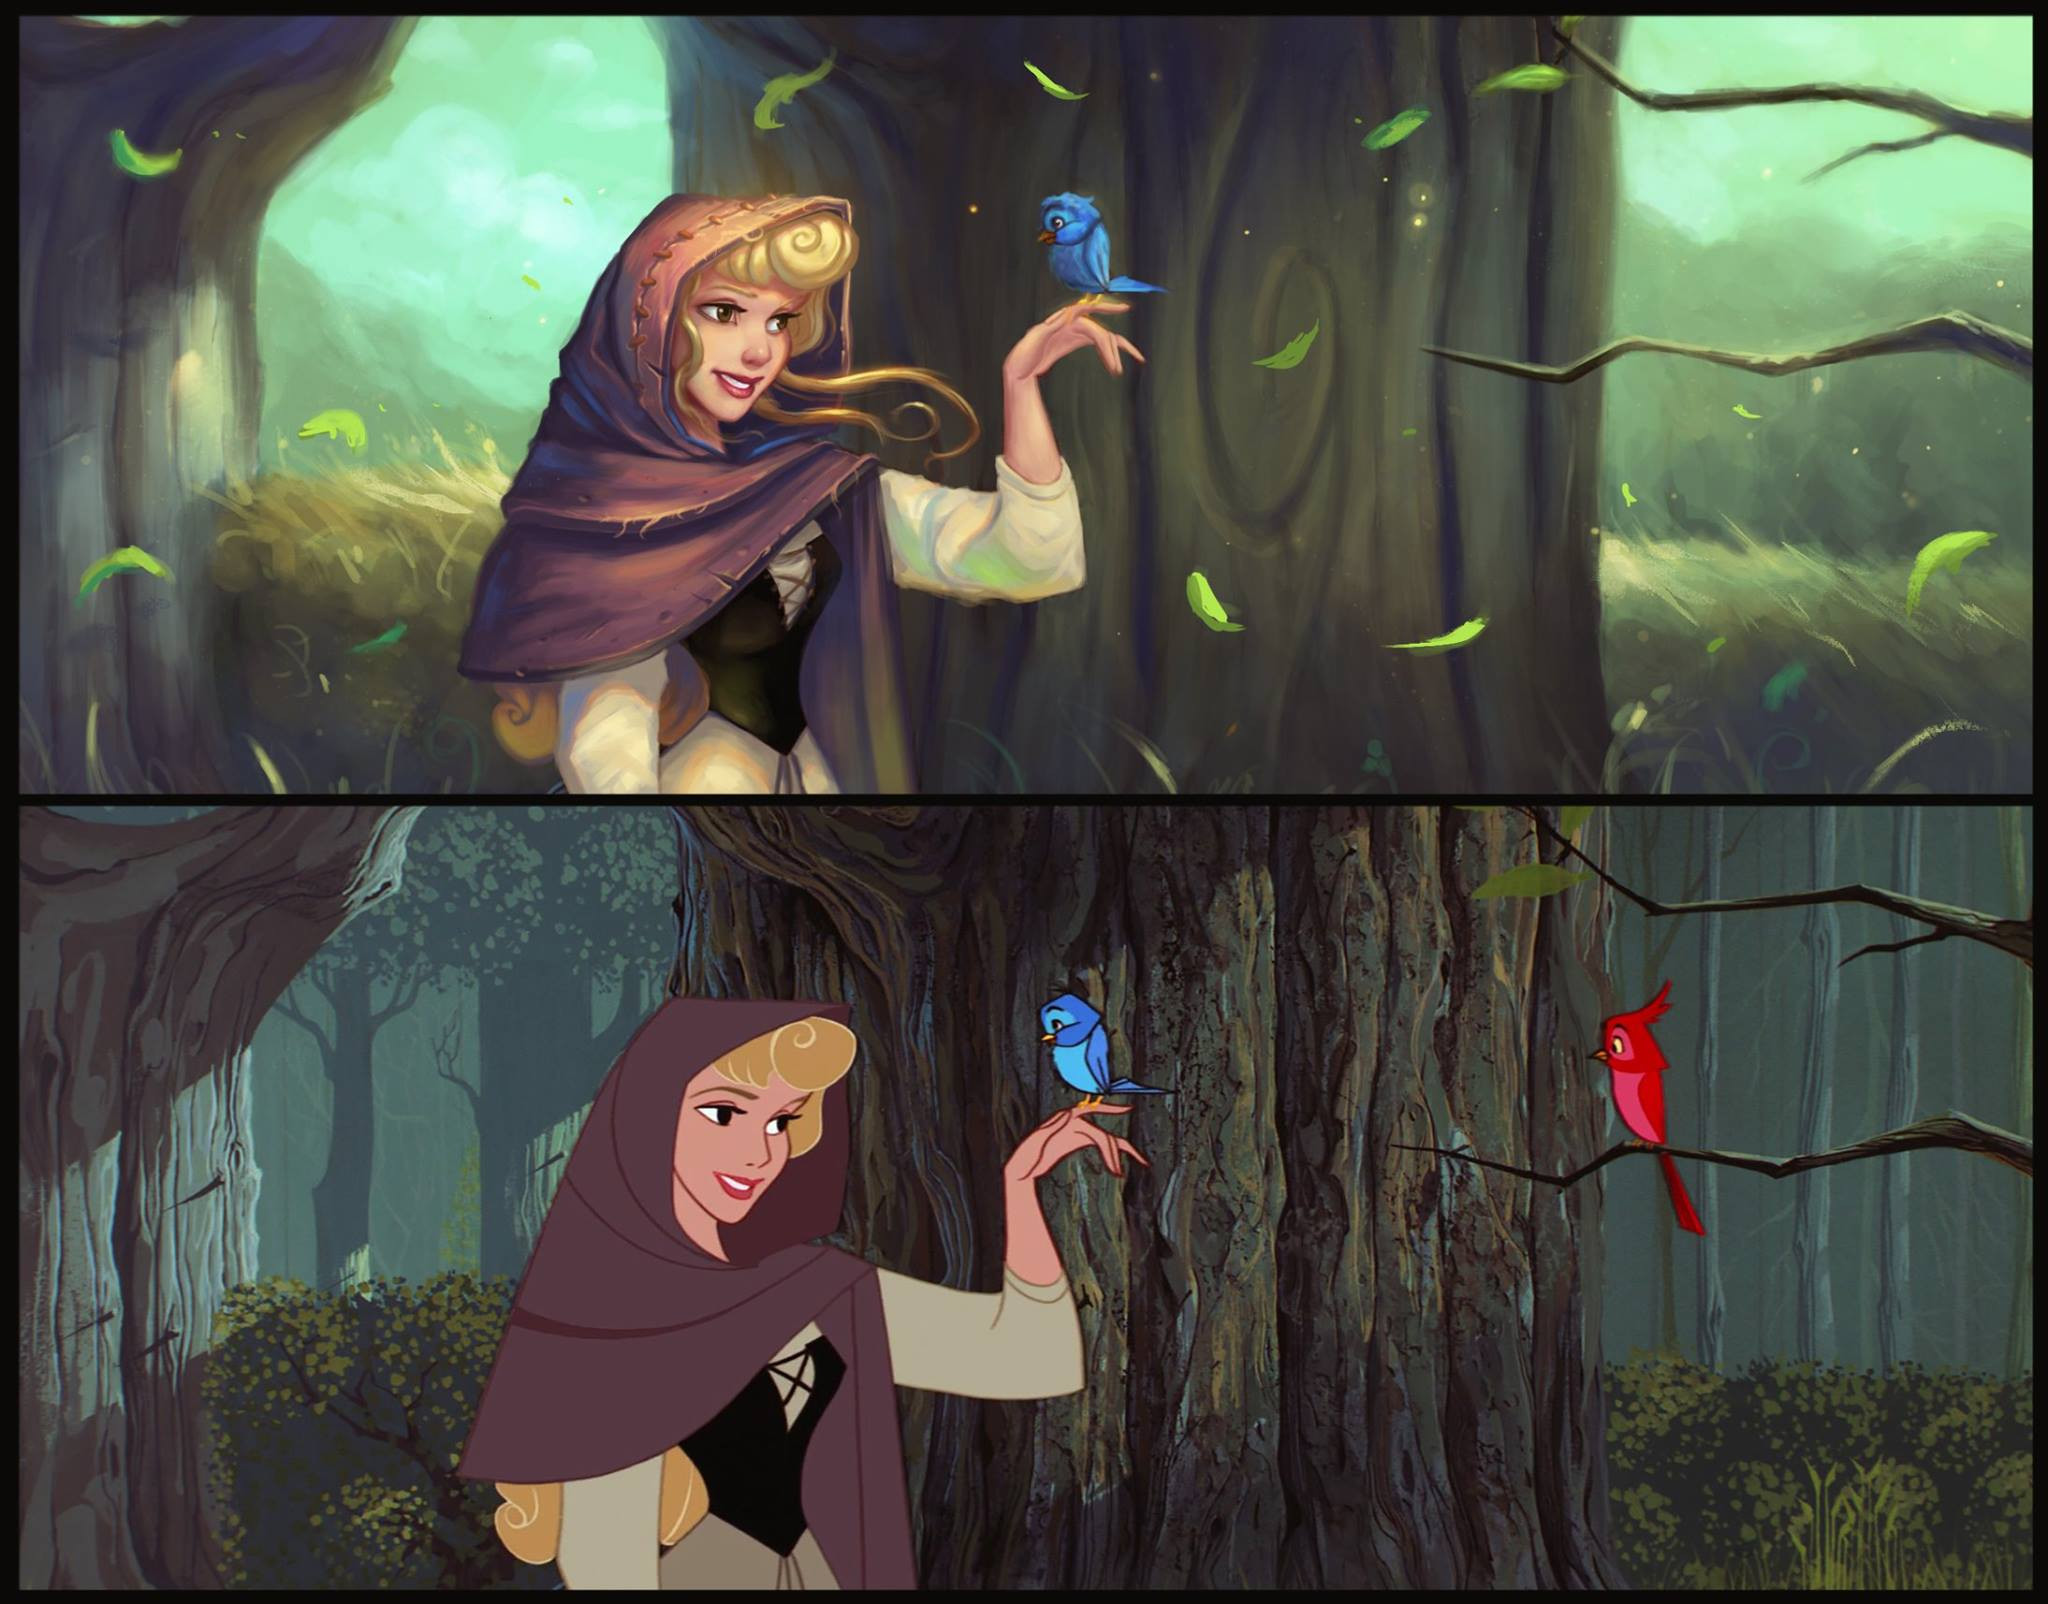 ArtStation - Disney paintover: Sleeping Beauty